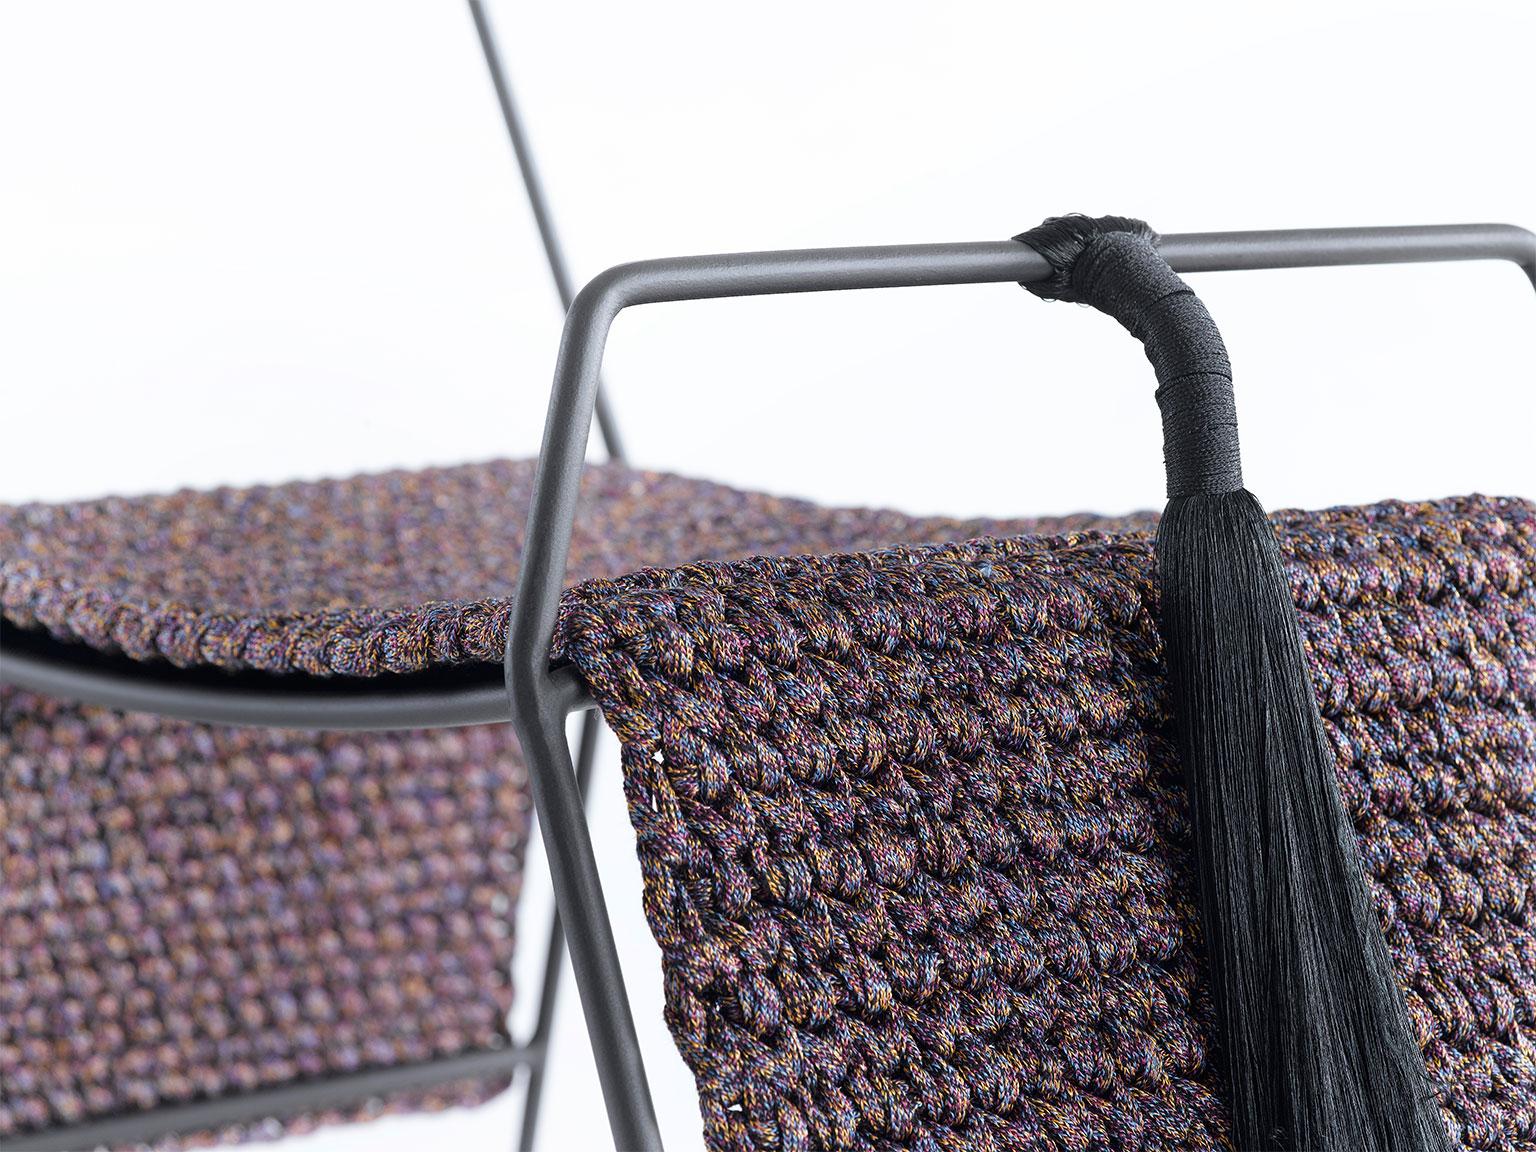 Israeli Matte Black Iron Handmade Textile Rocking Horse Stool with Rug Seat